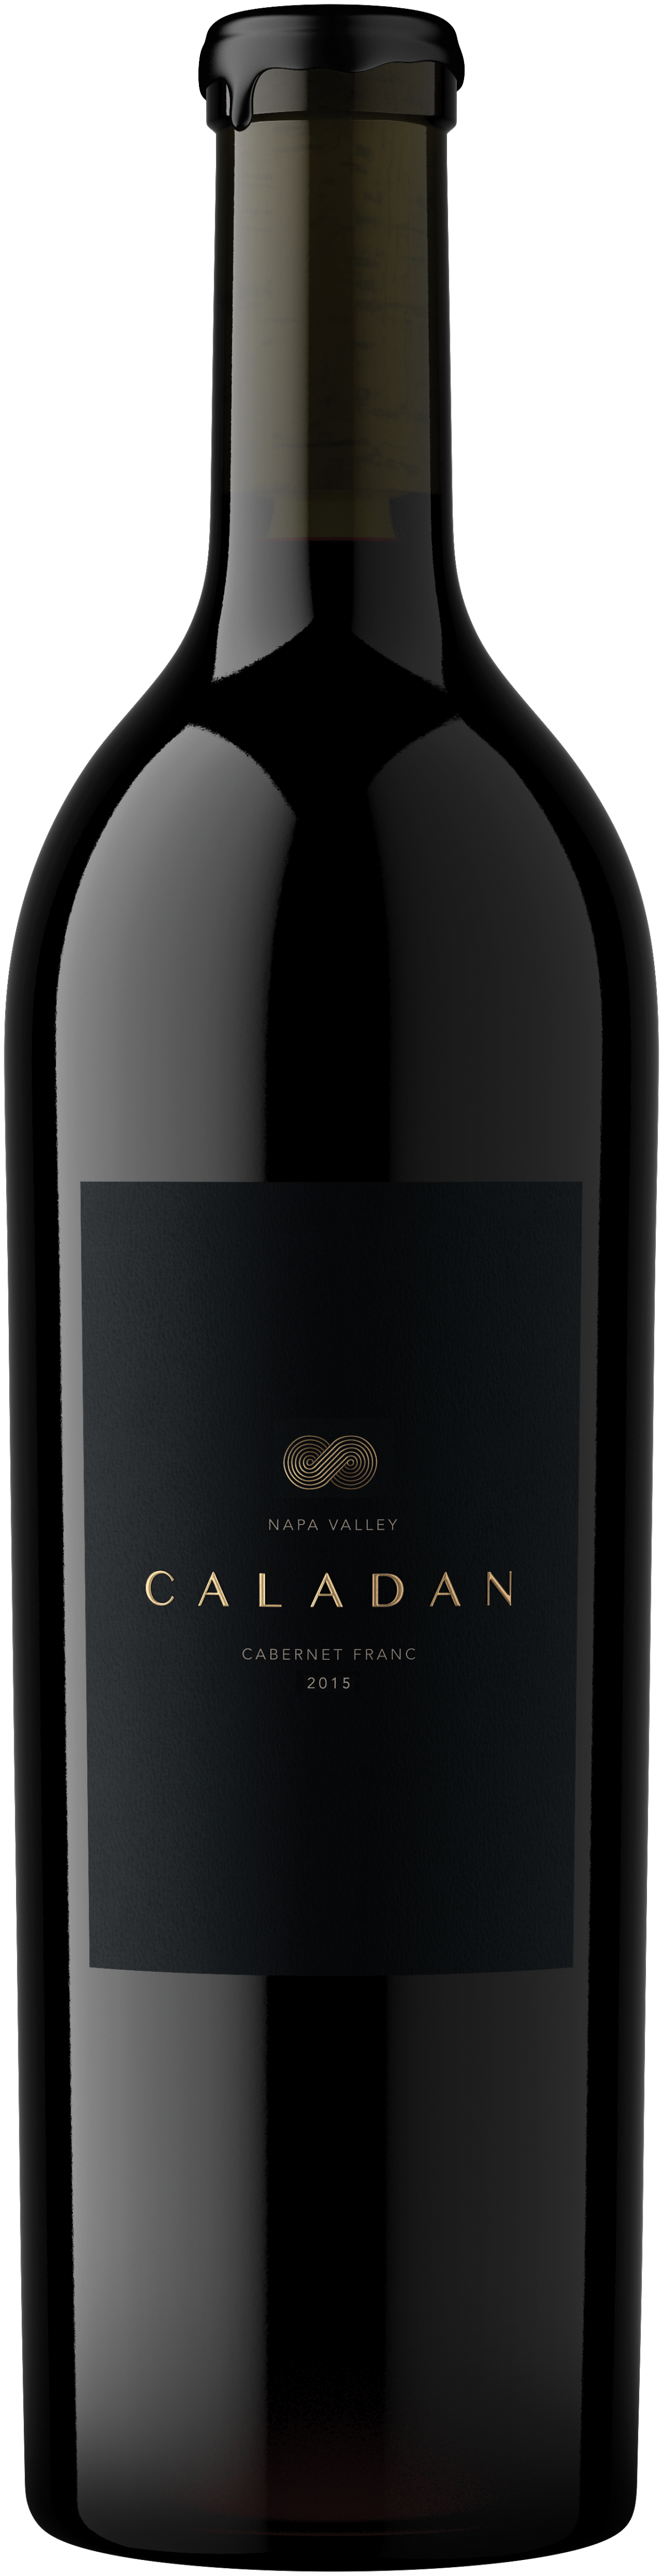 Caladan 2015 Cabernet Franc wine bottle